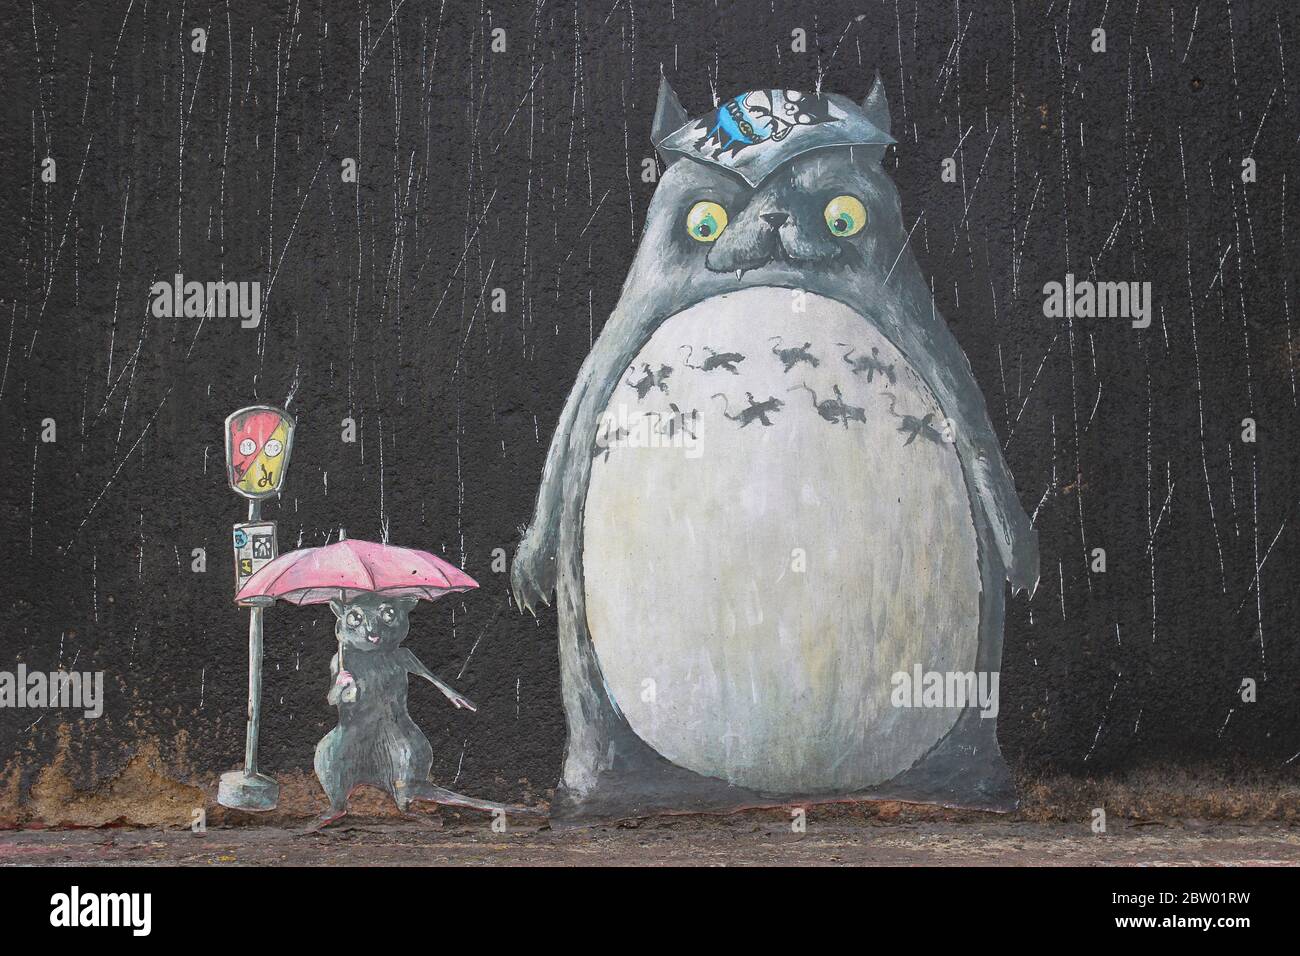 Graffiti Paste Ups Art von Lost Hills of Miyazakis Animationsfilm „My Neighbor Totoro“. Stockfoto